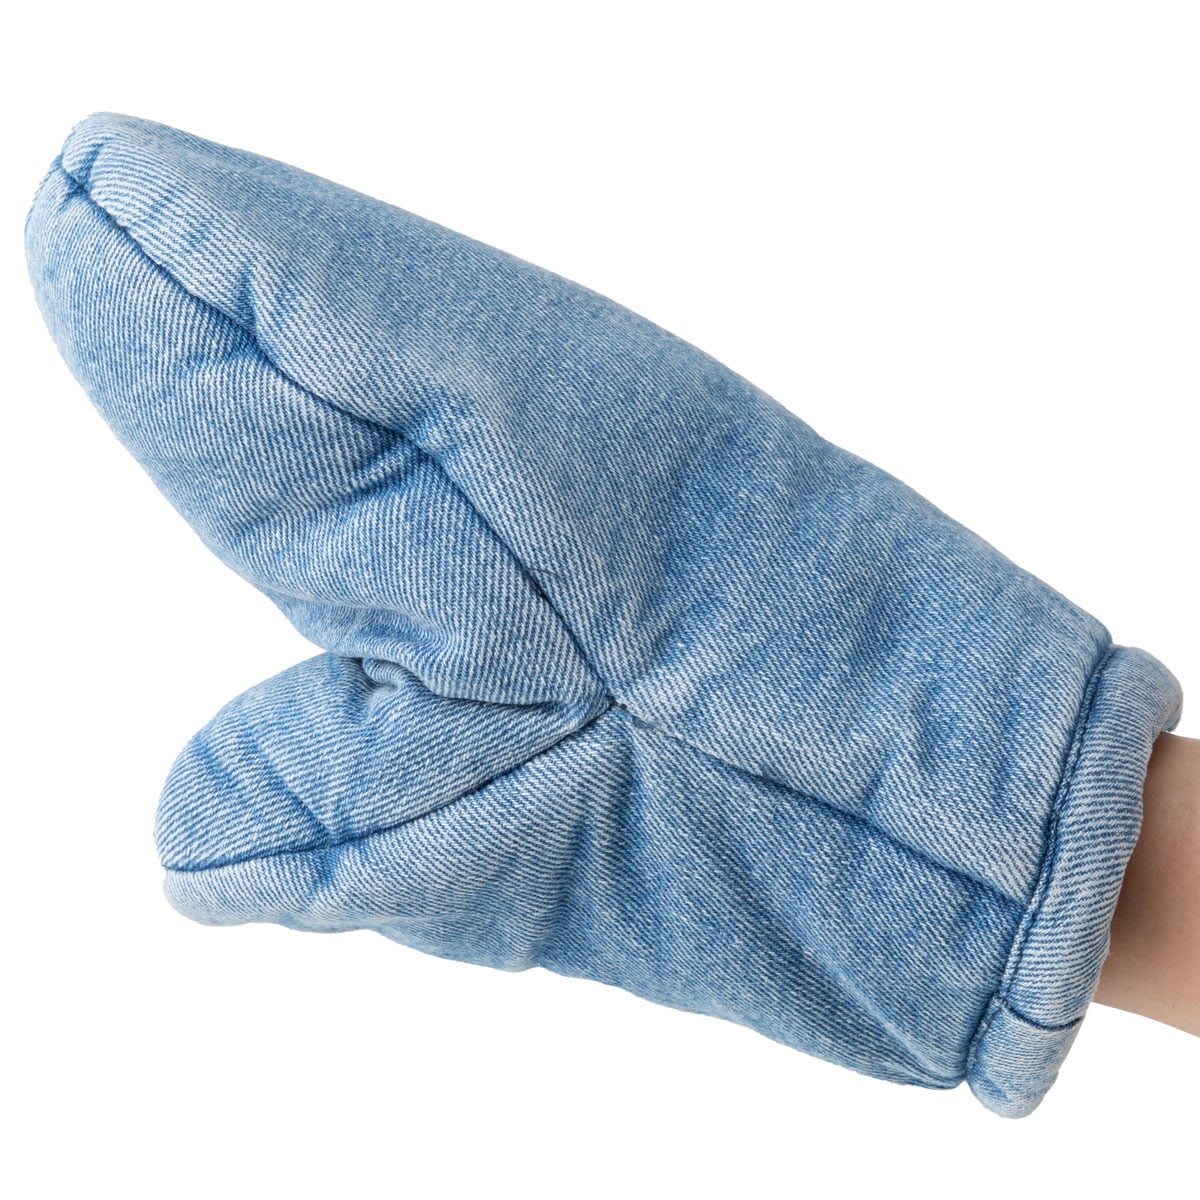 【家居】水洗手套 DENIM 藍色